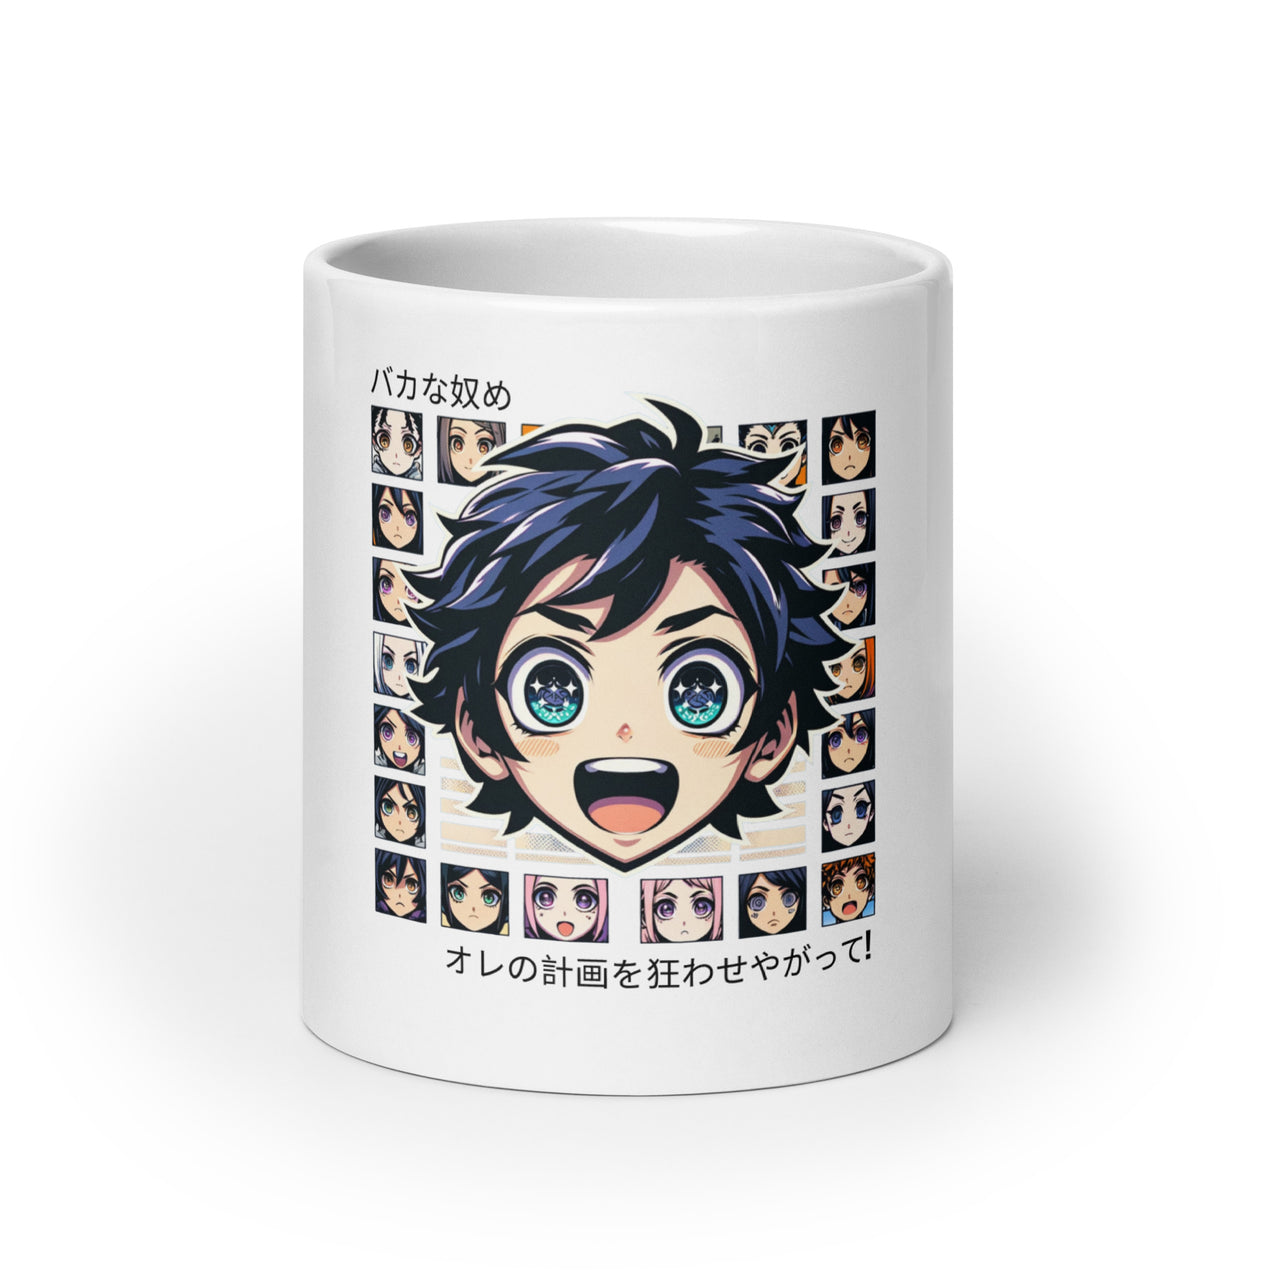 Anime Boy with Surprised Expression White Mug